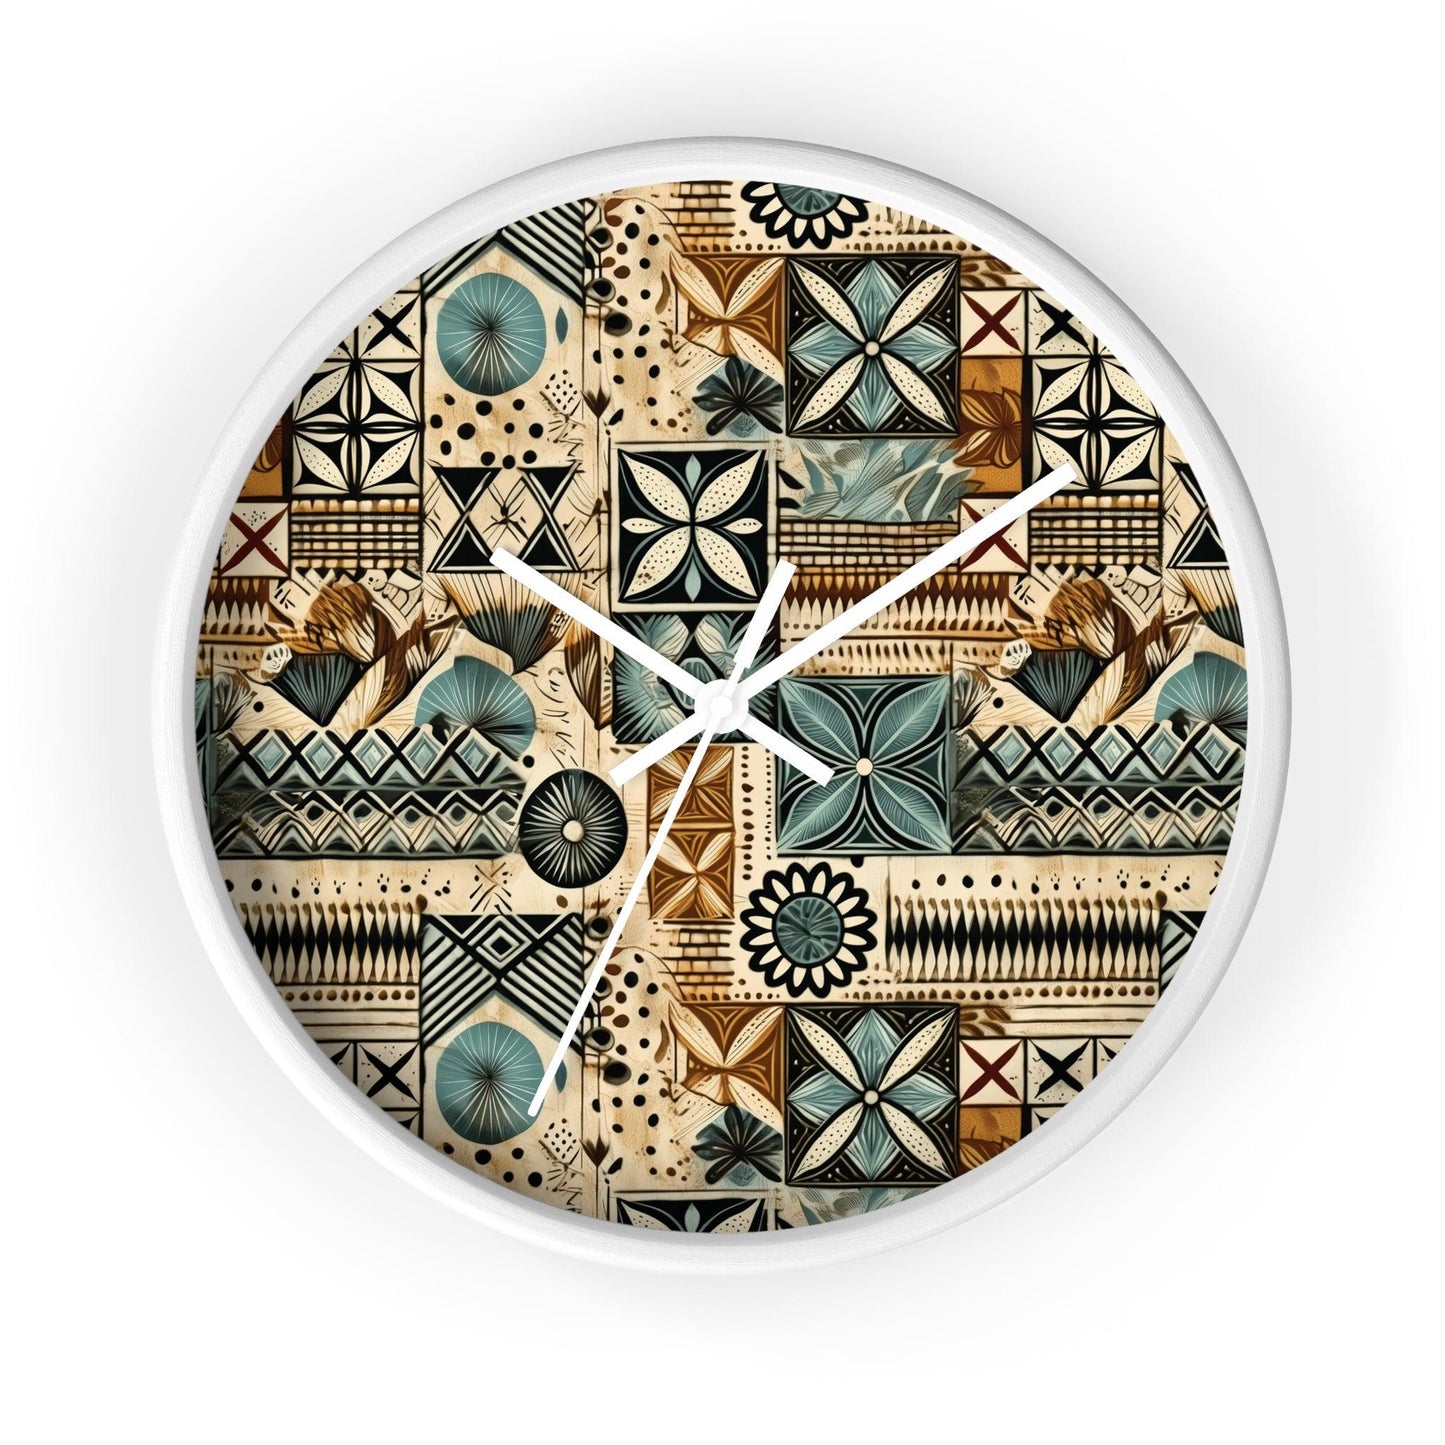 Pacific Islands Tapa Cloth Wall Clock - The Global Wanderer